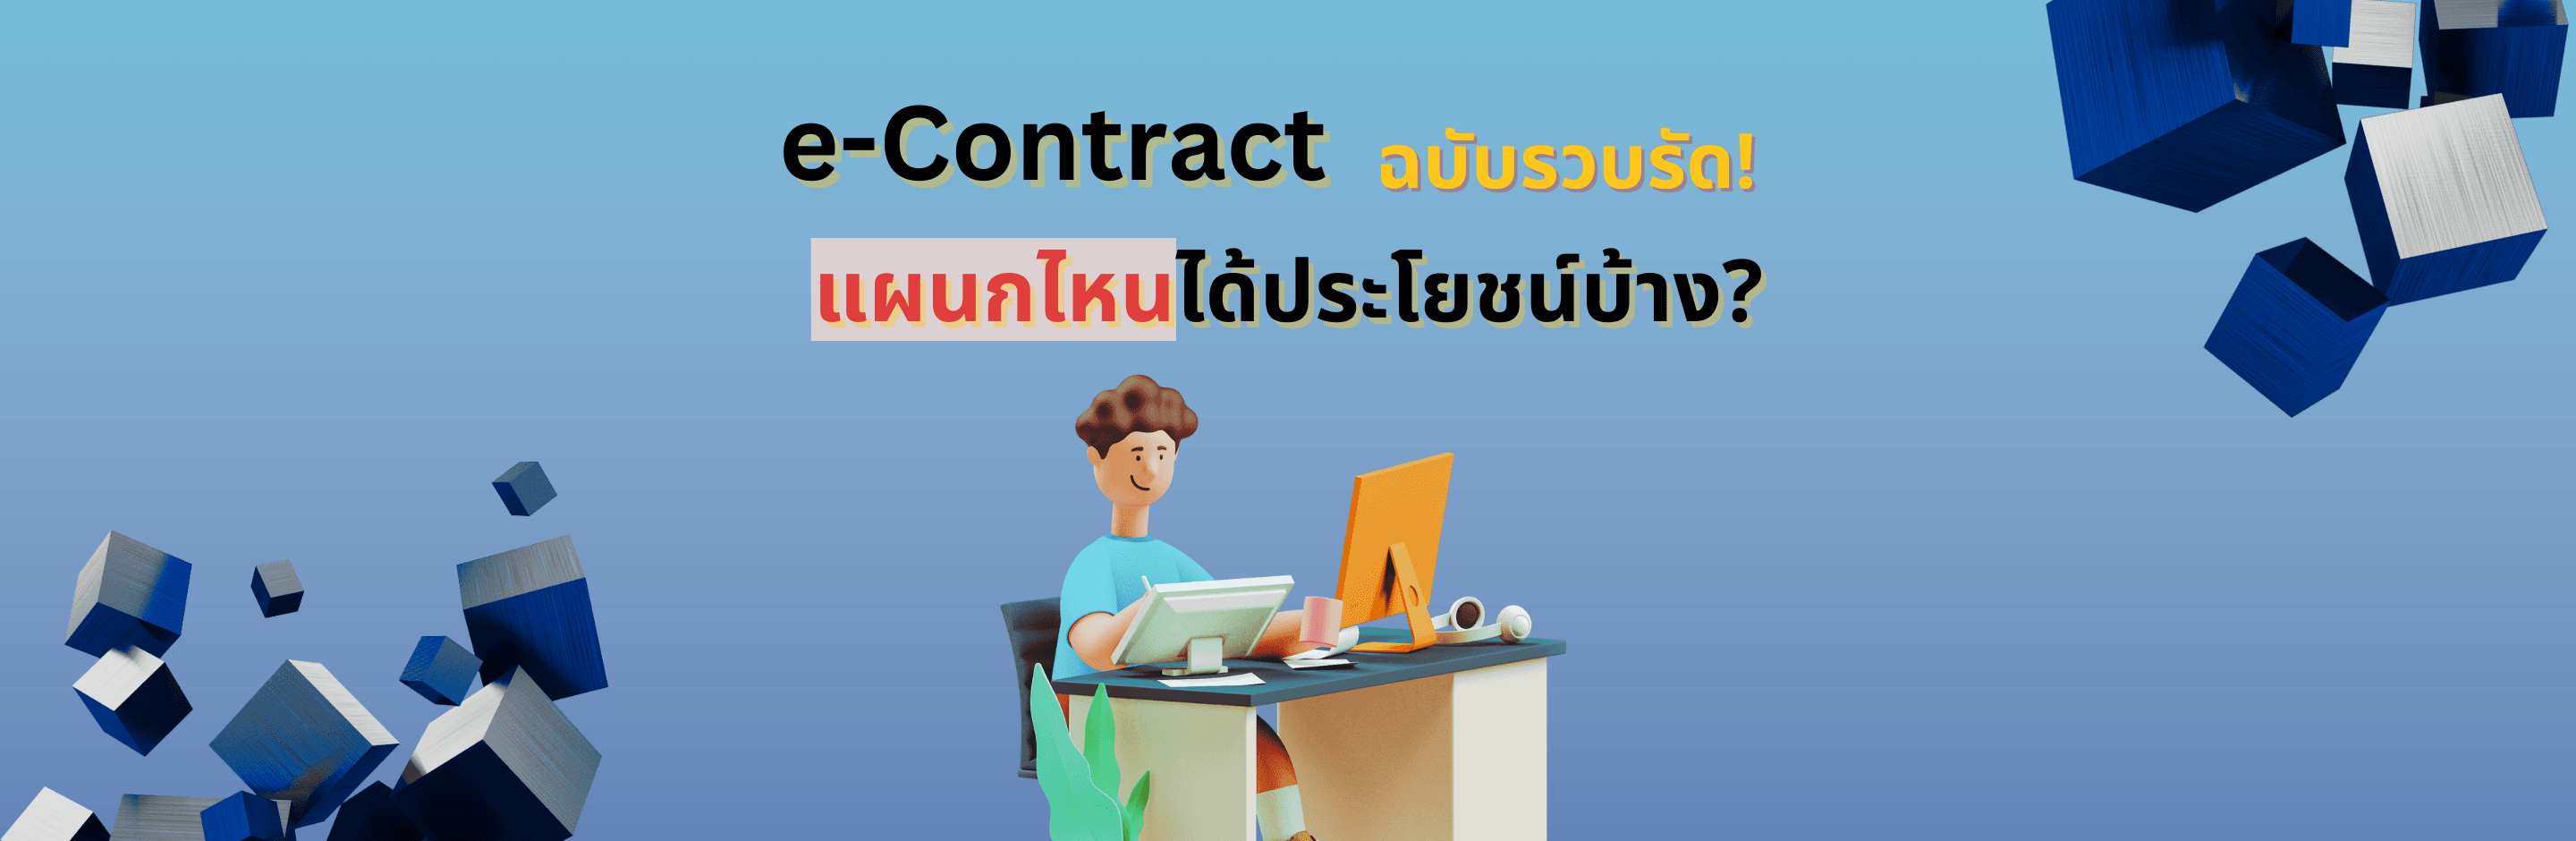 e-Contract ฉบับรวบรัด! แผนกไหนได้ประโยชน์บ้าง?